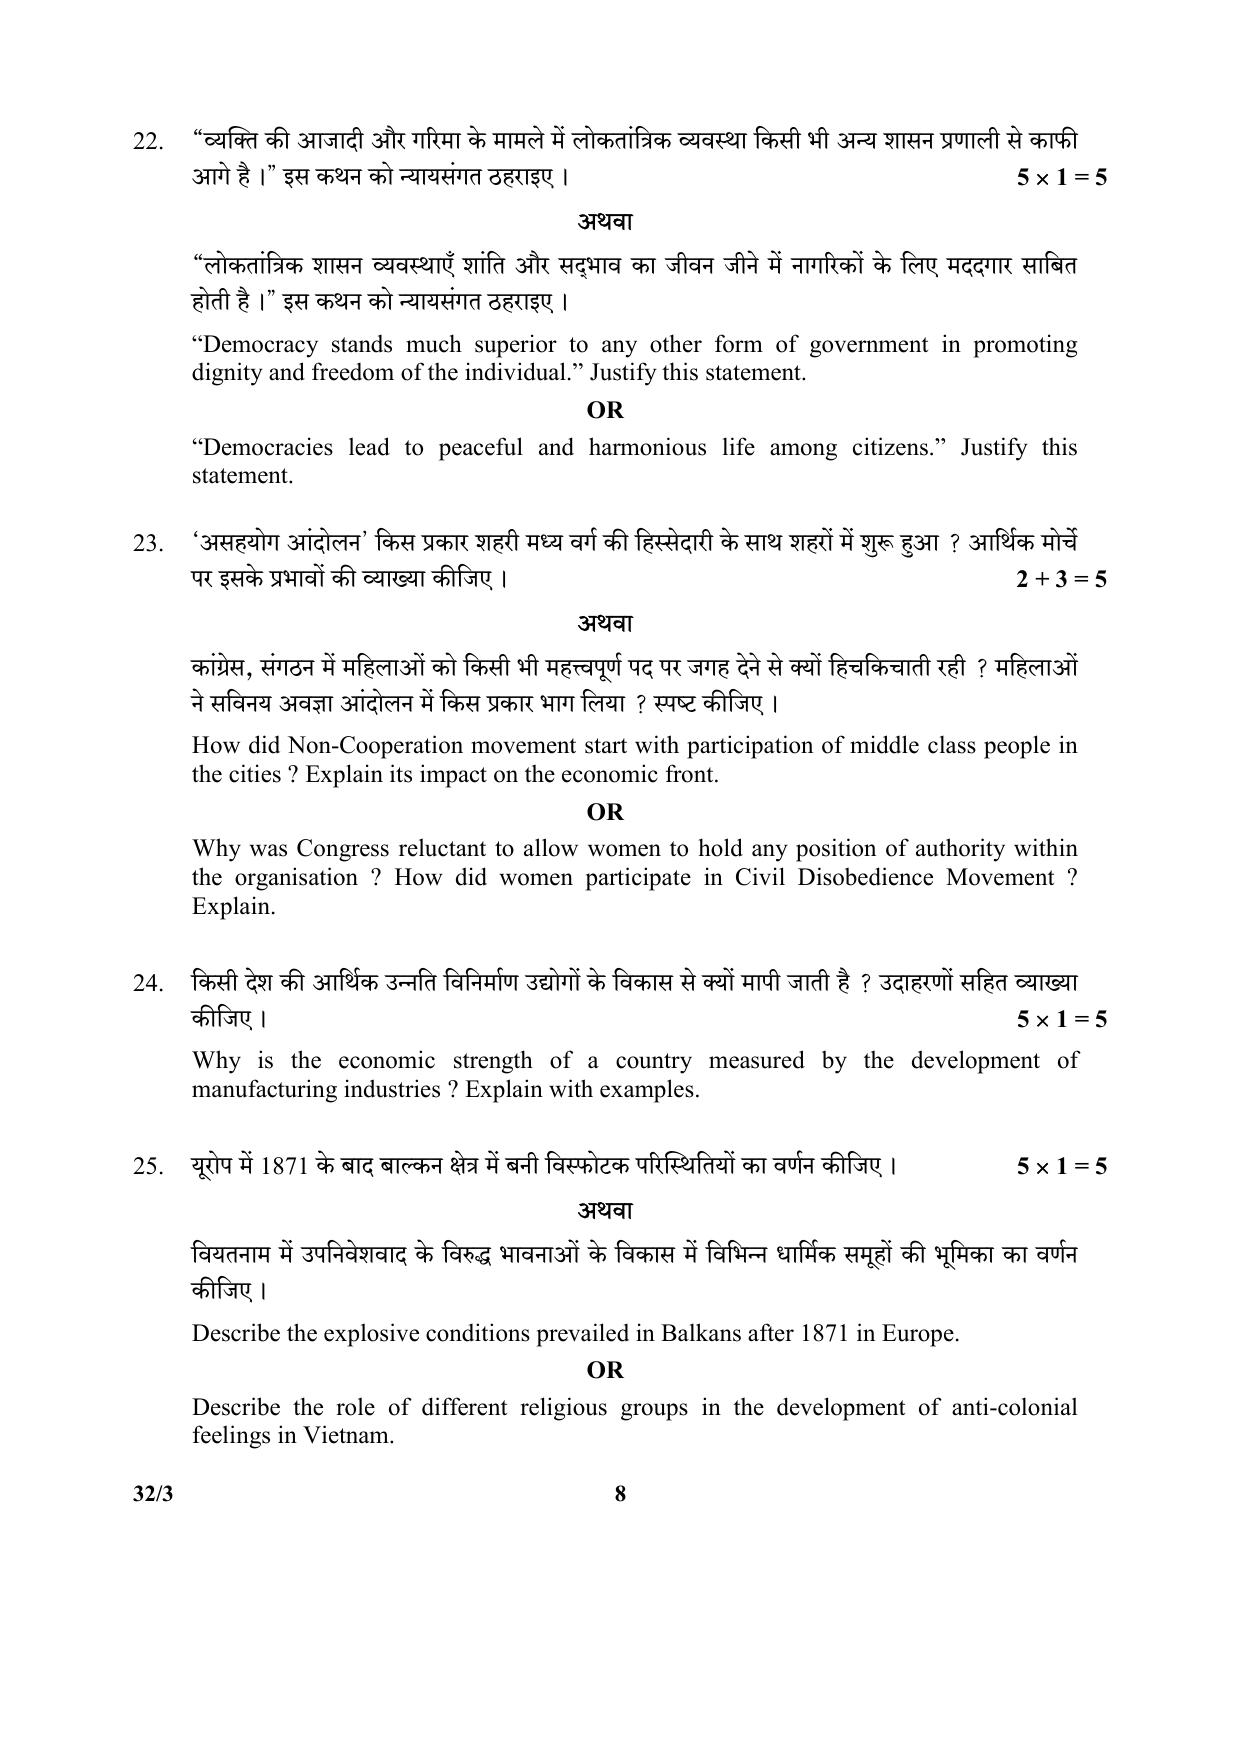 CBSE Class 10 32-3_Social Science SET-3 2018 Question Paper - Page 8